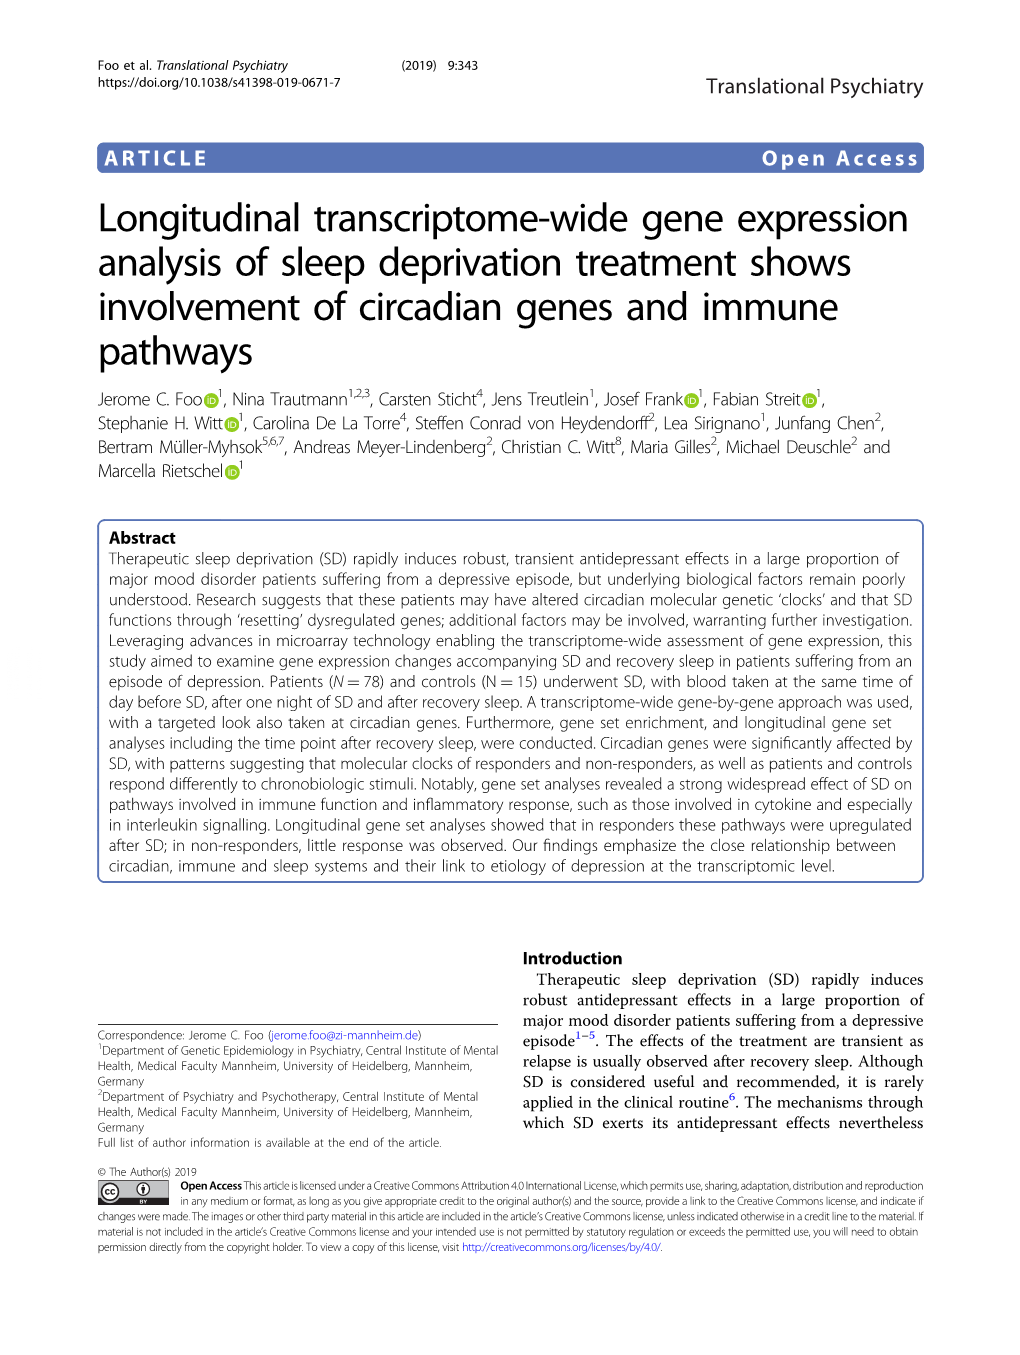 Longitudinal Transcriptome-Wide Gene Expression Analysis of Sleep Deprivation Treatment Shows Involvement of Circadian Genes and Immune Pathways Jerome C